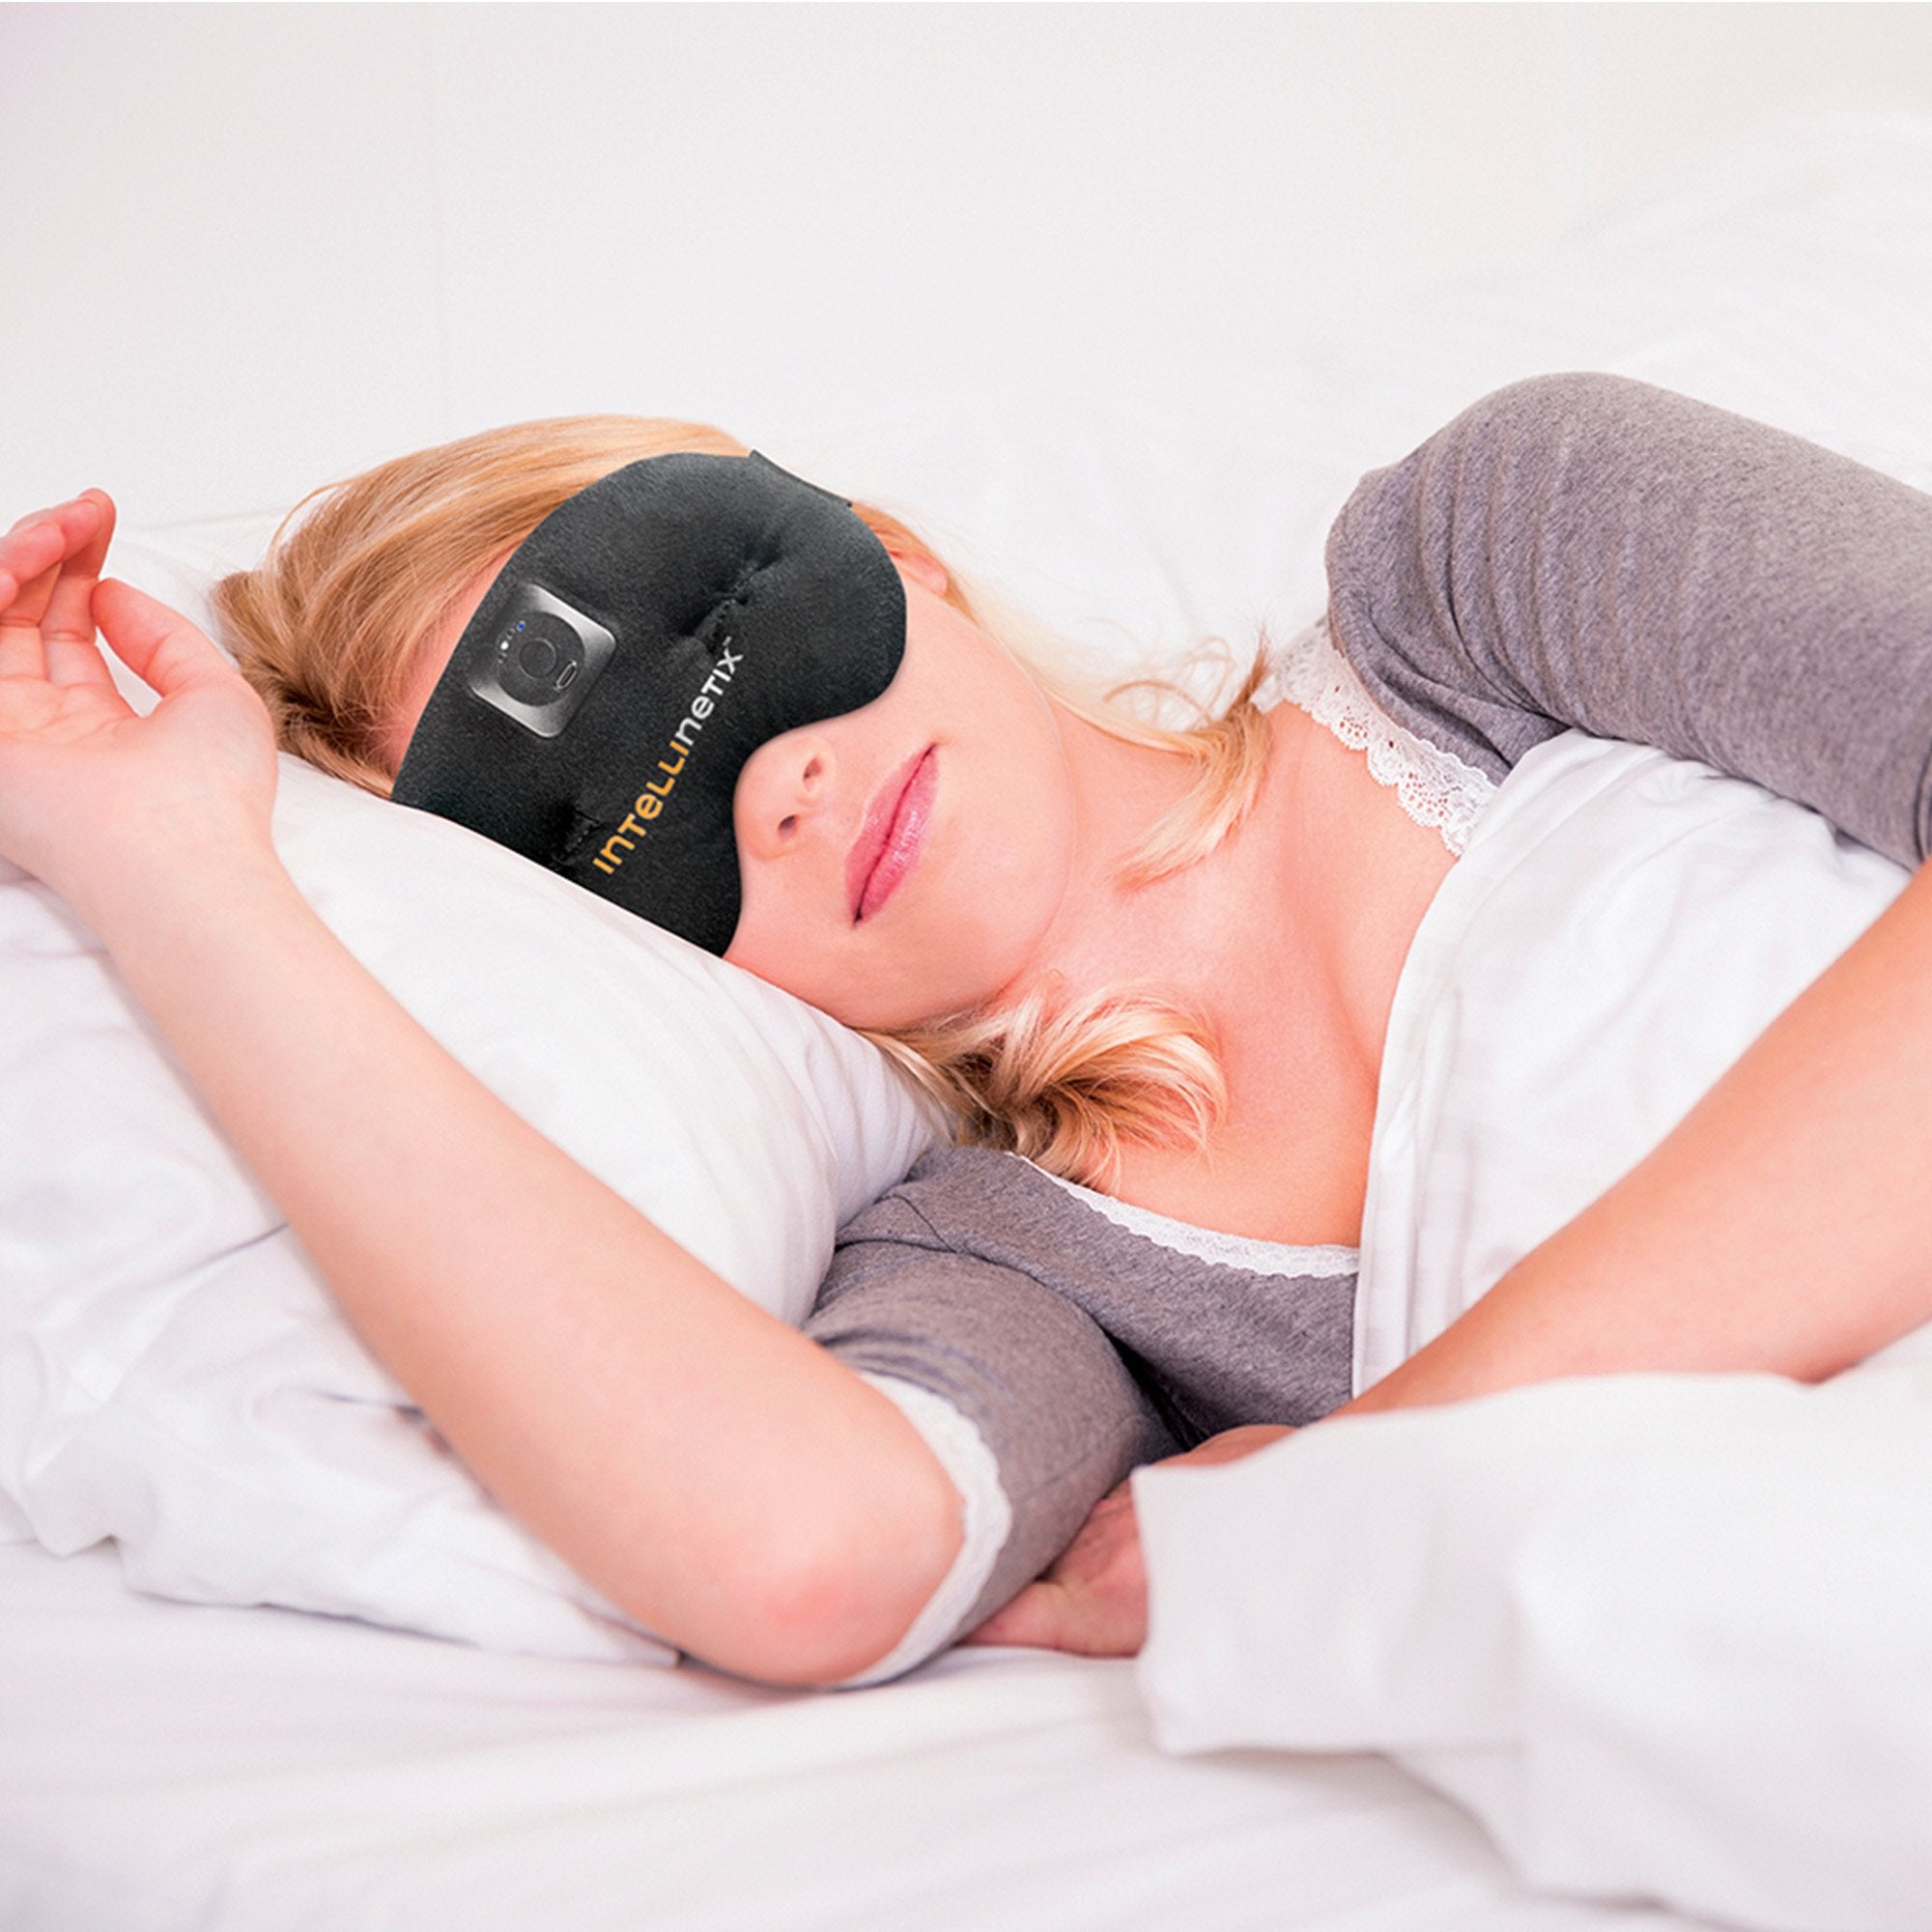 Vibration Therapy Mask Intellinetix Head One Size Fits Most